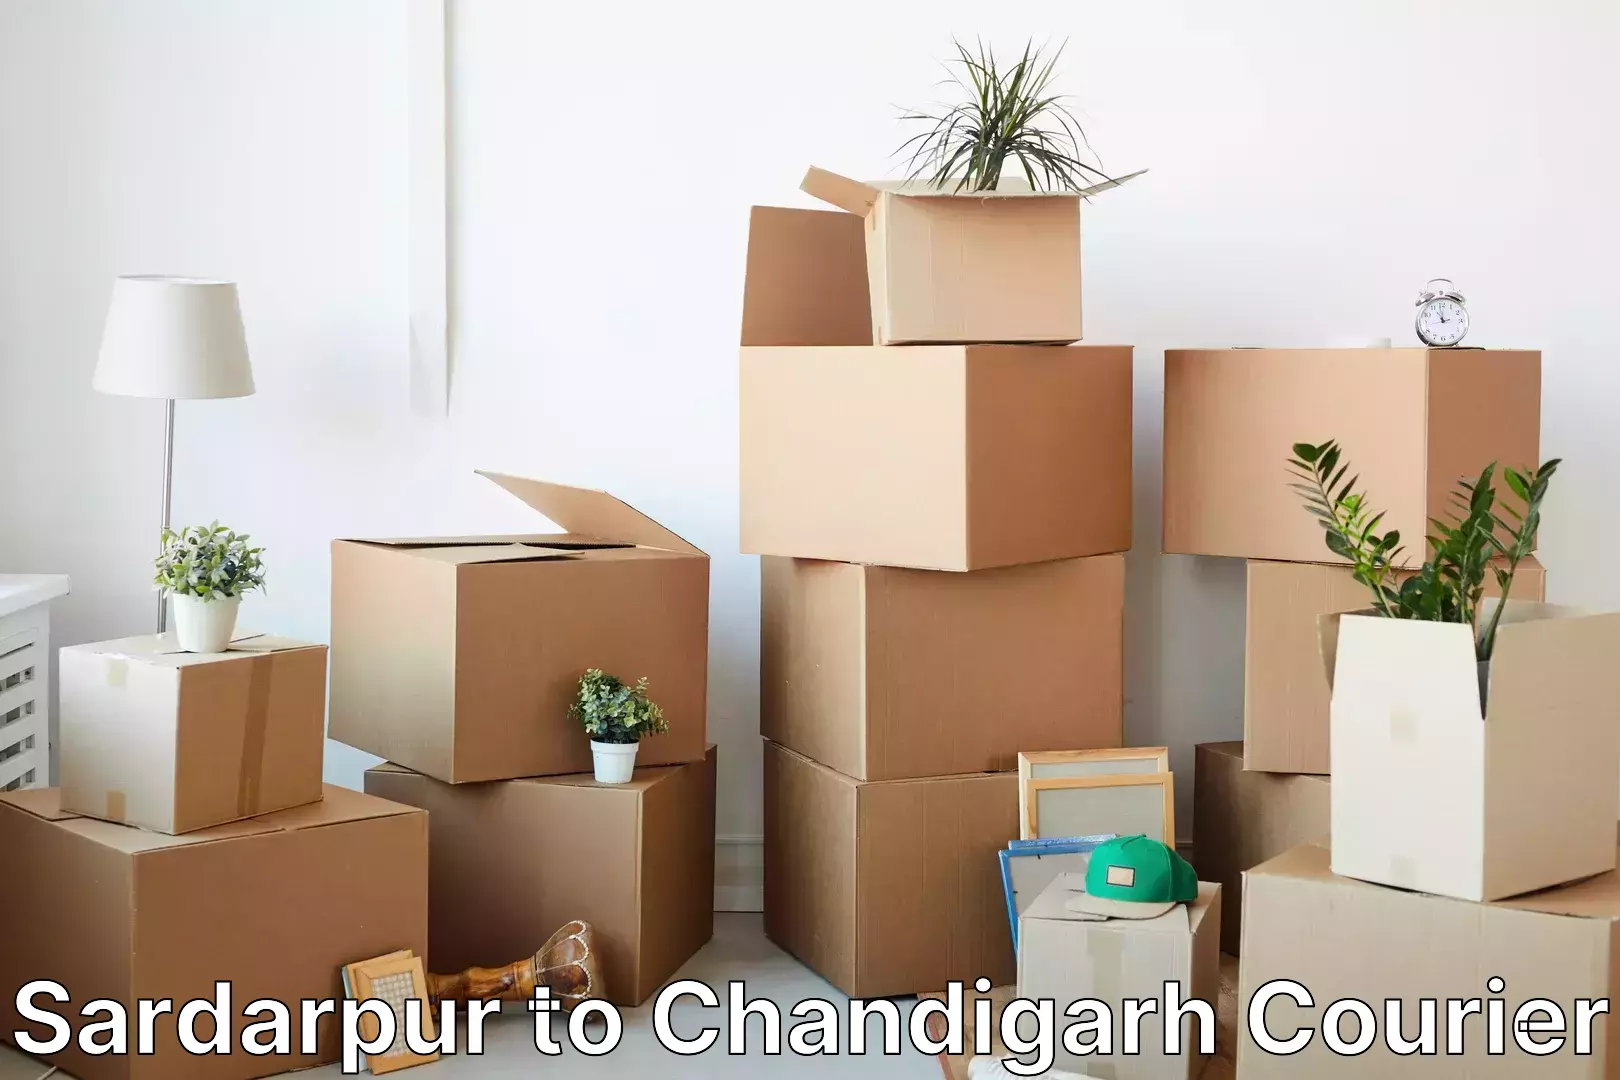 Luggage shipment specialists Sardarpur to Chandigarh